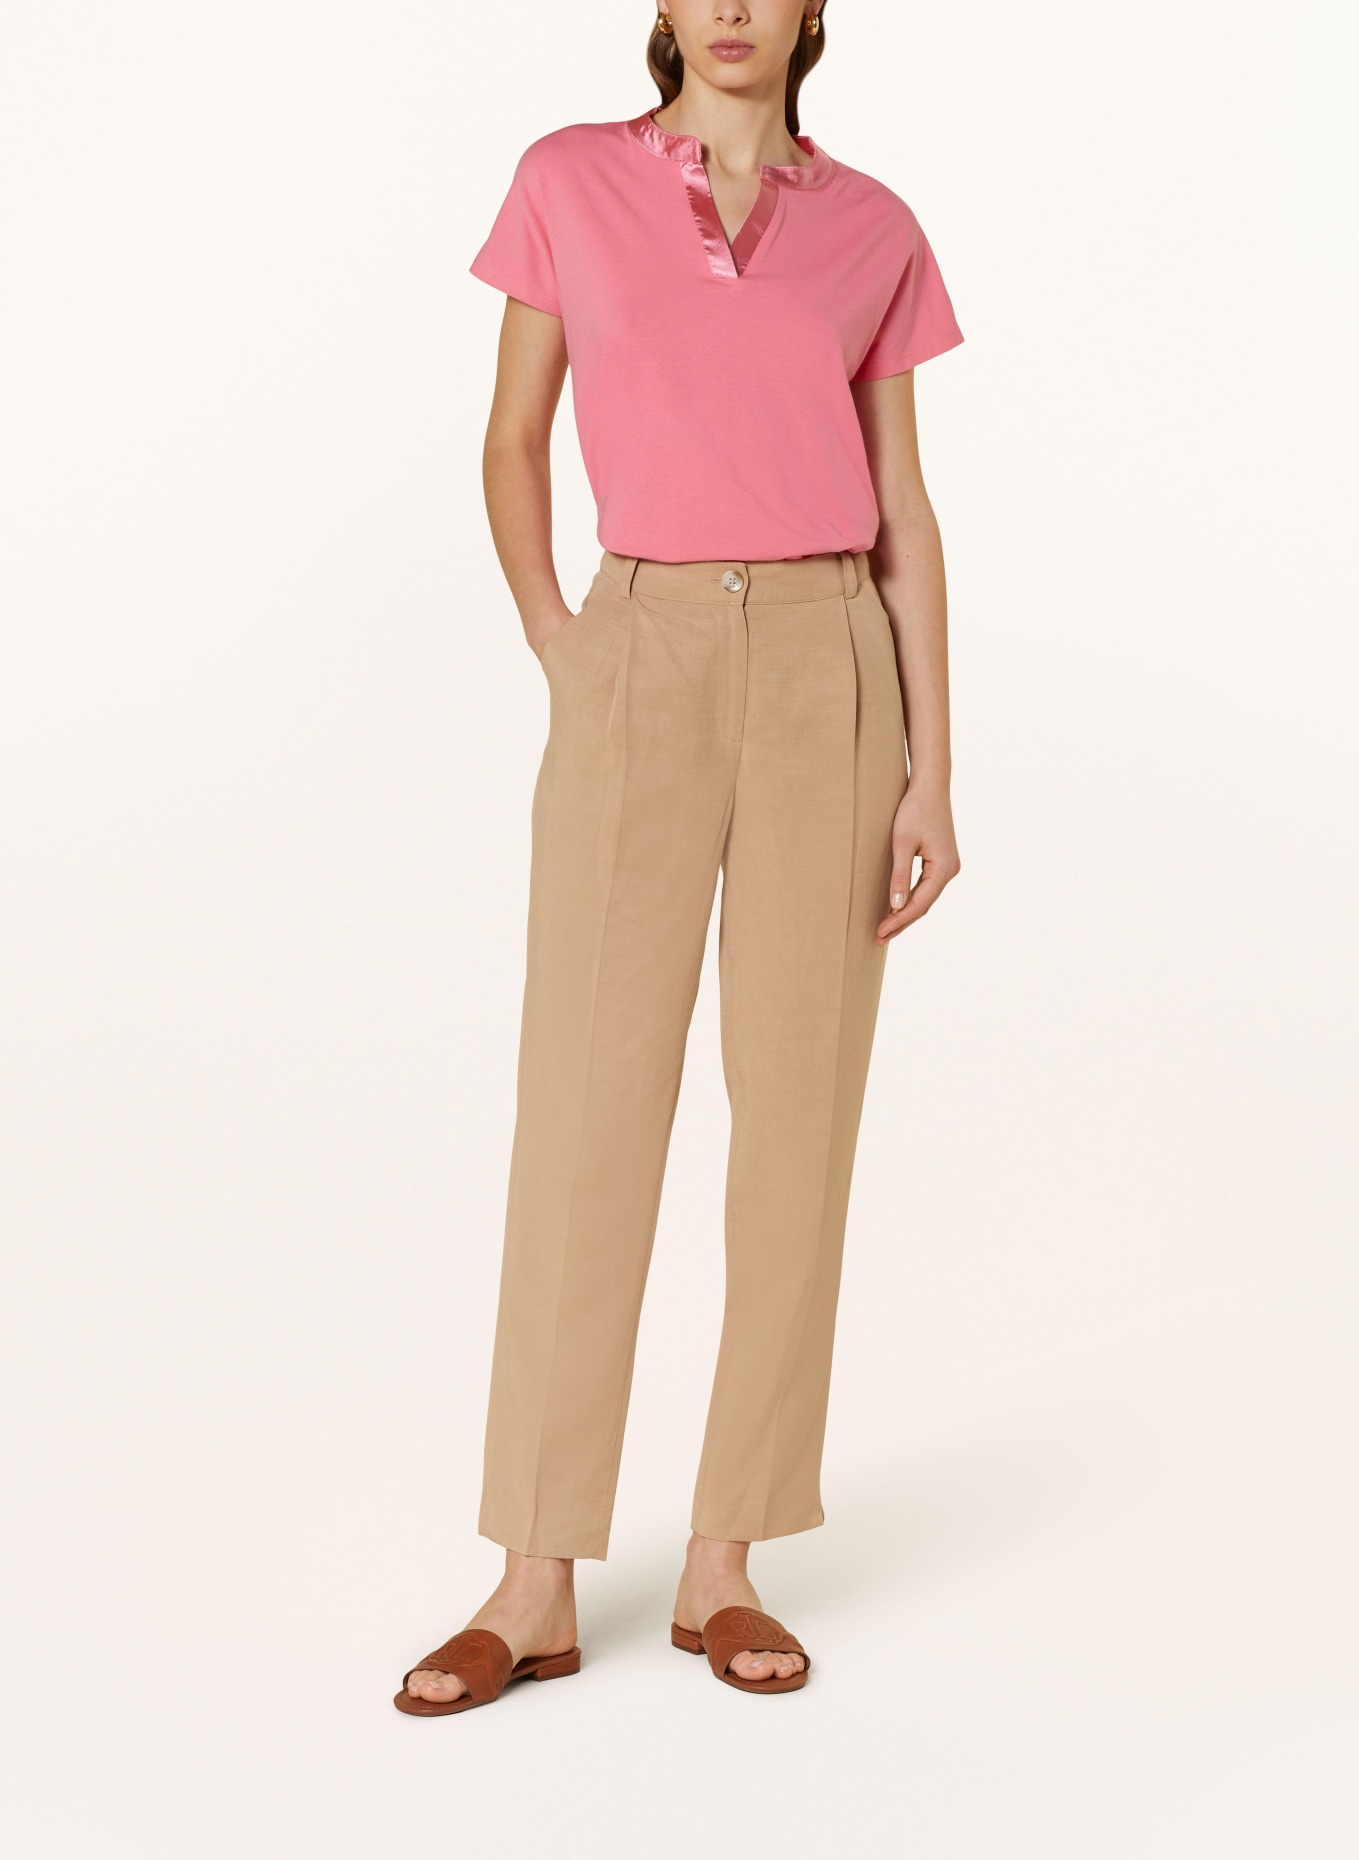 MORE & MORE Blusenshirt, Farbe: 0835 sorbet pink (Bild 2)